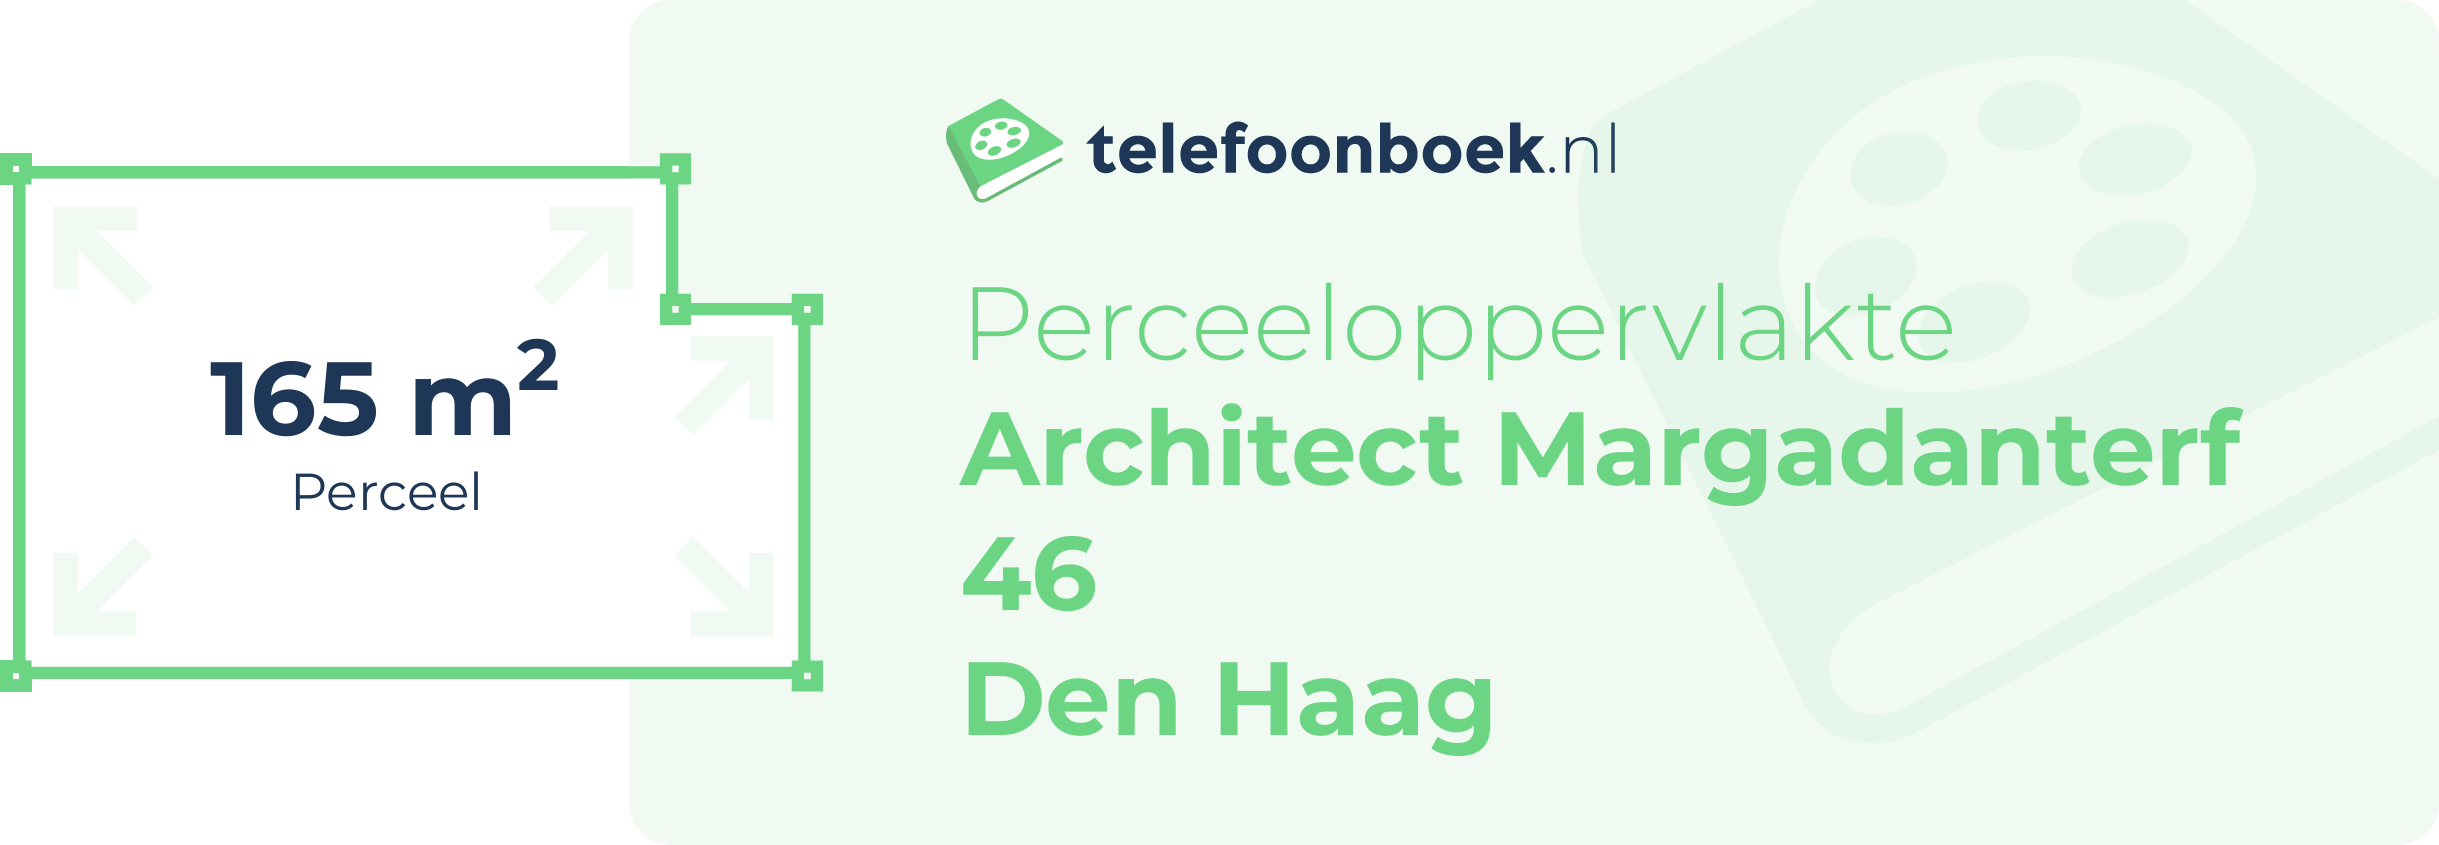 Perceeloppervlakte Architect Margadanterf 46 Den Haag